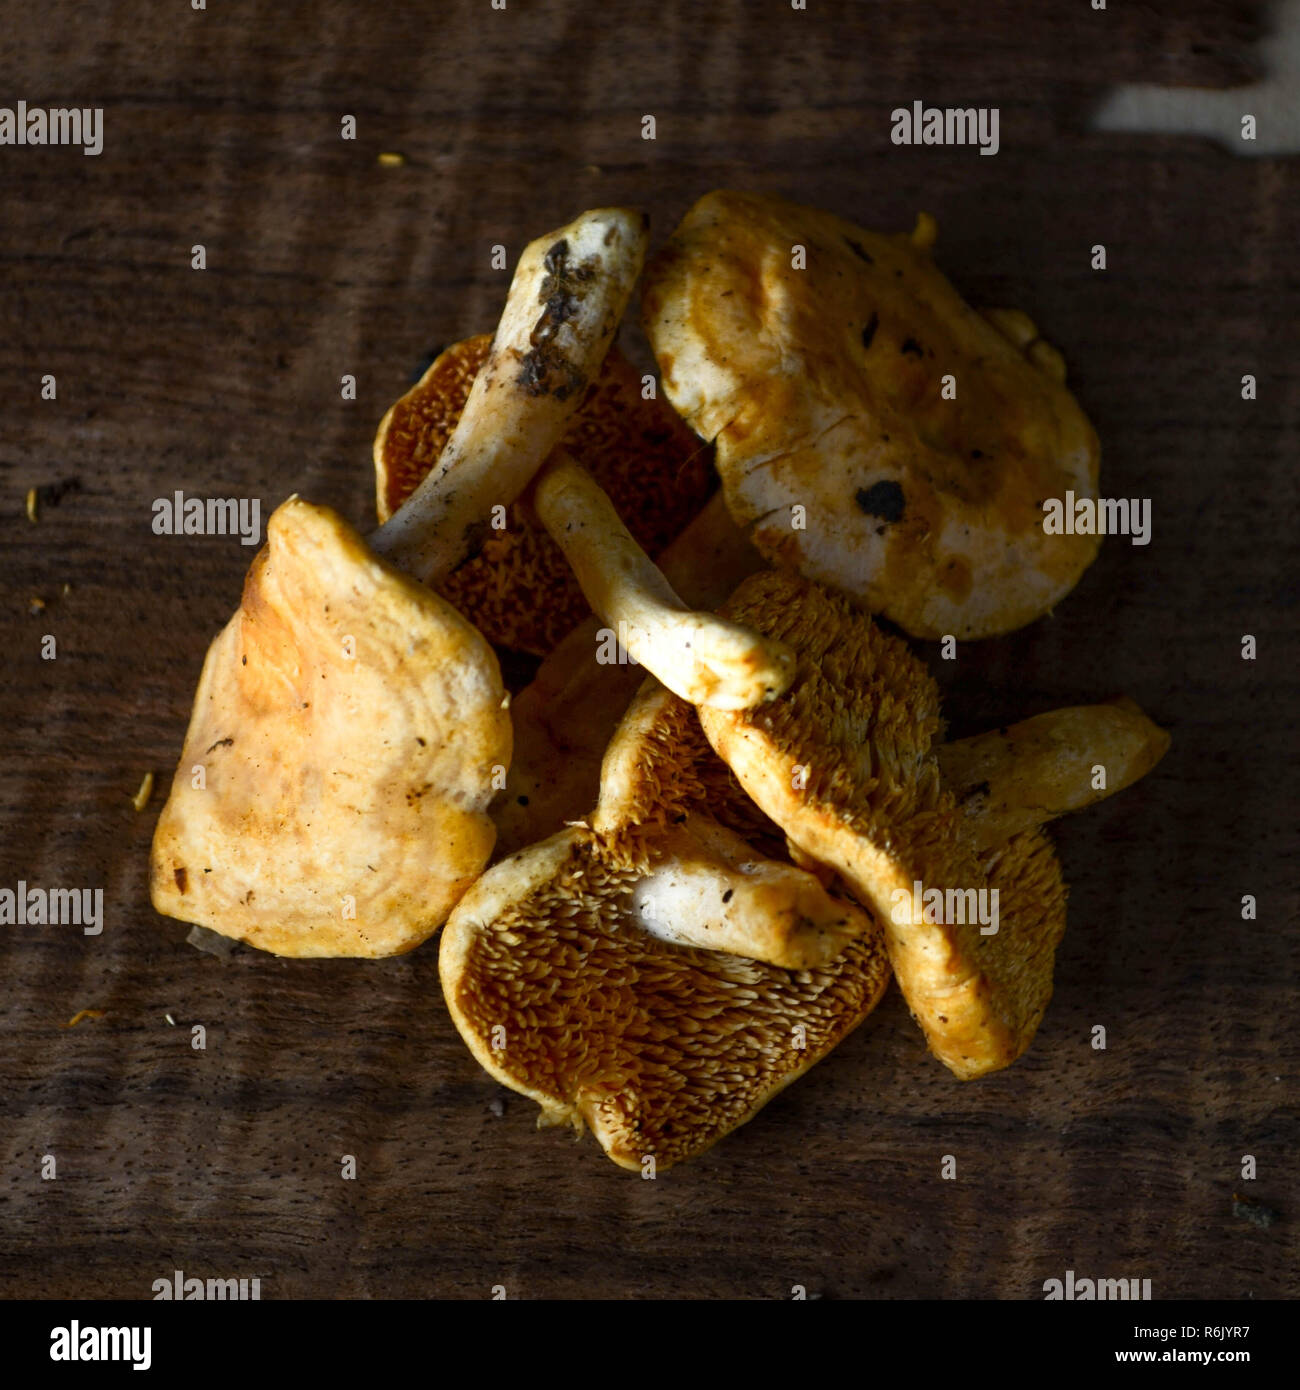 Hedgehog mushrooms (Hydnum repandum), also called sweet tooth and wood hedgehog mushrooms, shown on a rustic dark wood background. Stock Photo